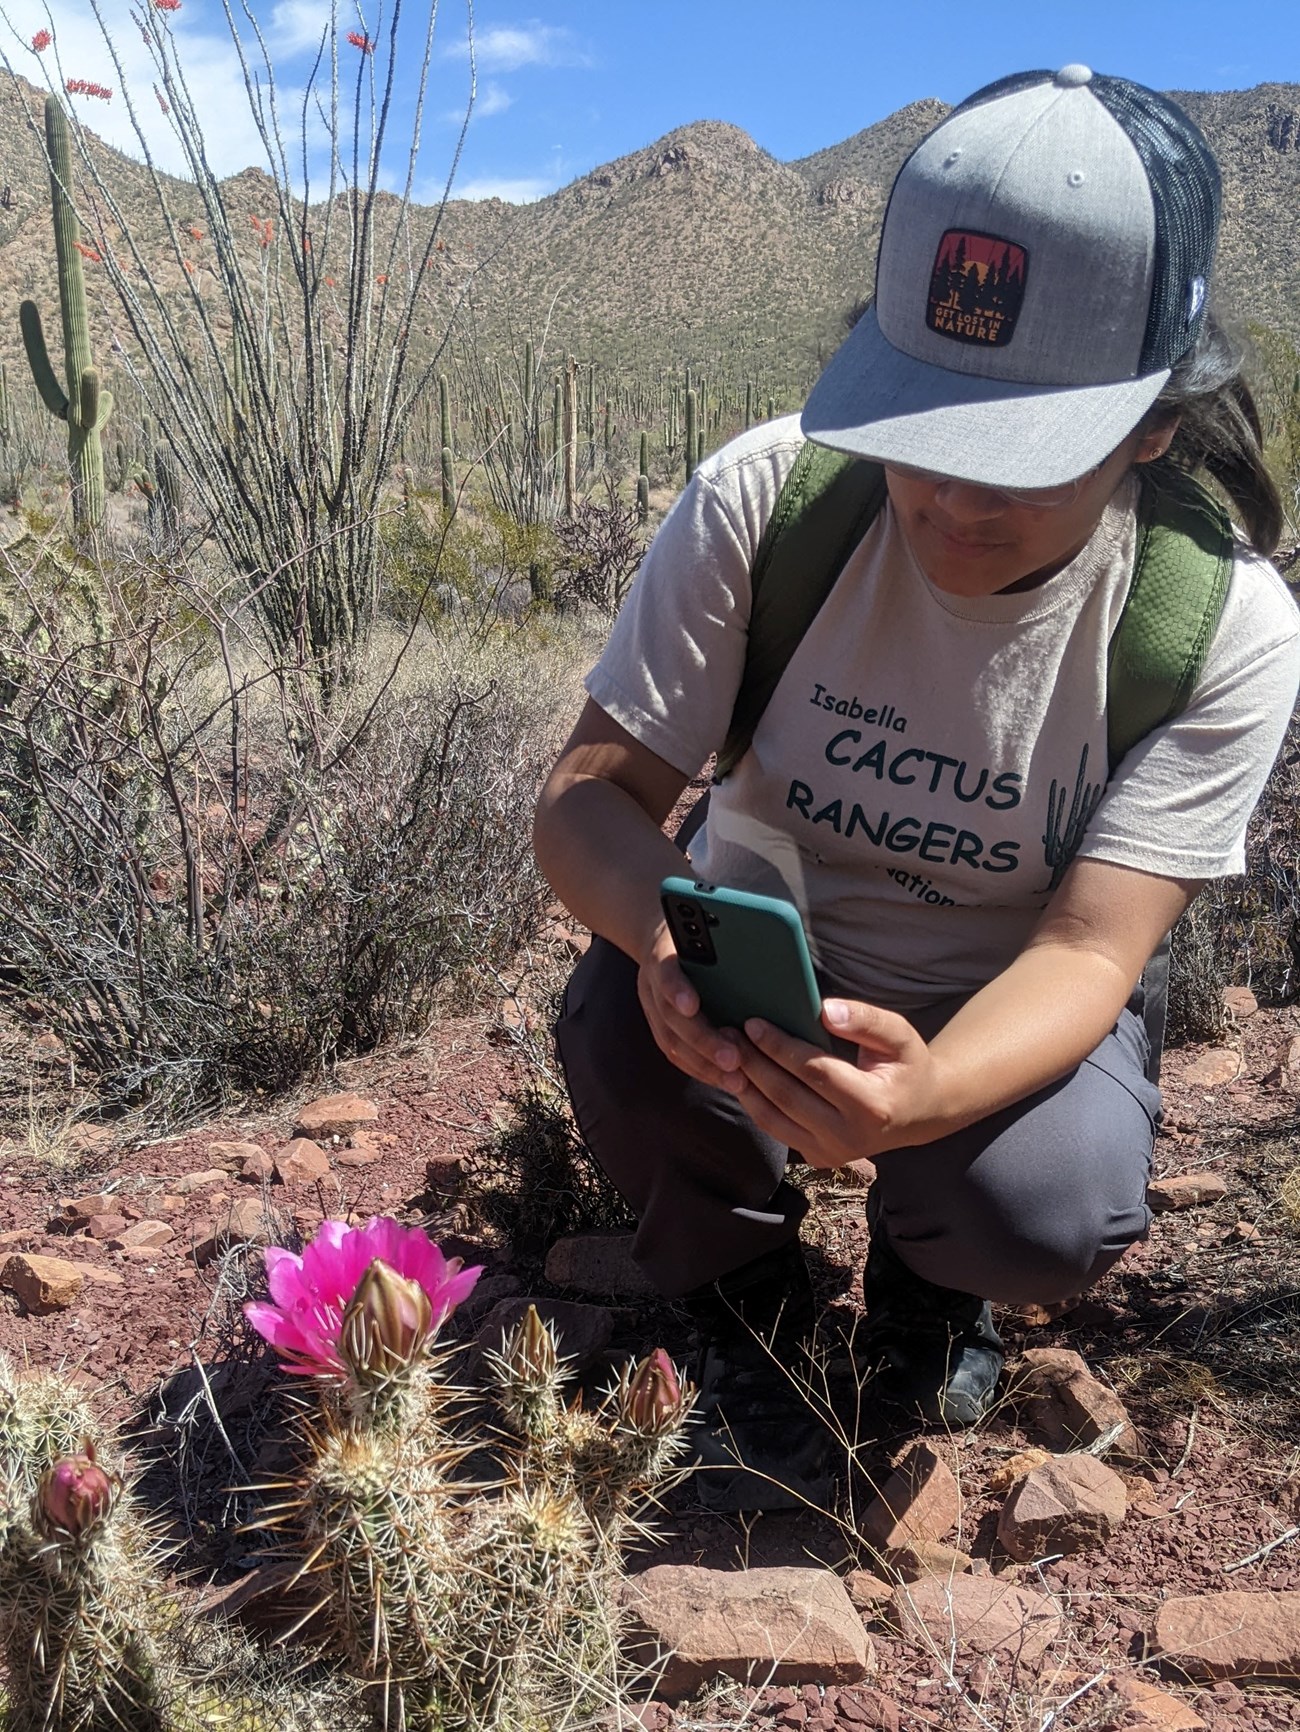 Cactus Ranger photographing pink cactus flower